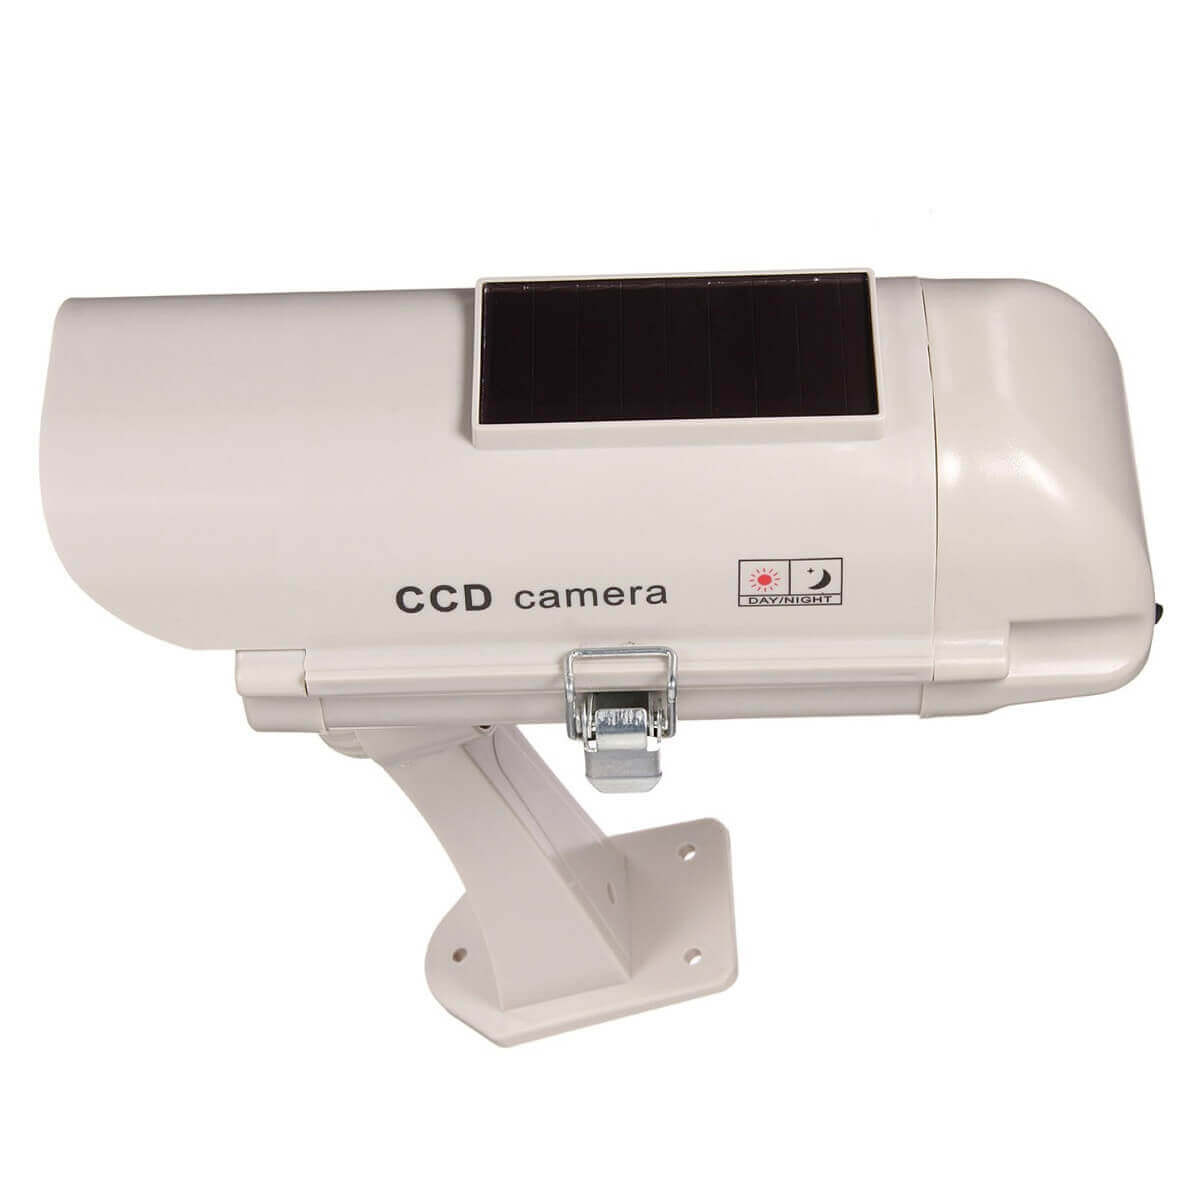 Caméra dôme factice Relaxdays 3x - blanche - avec LED - fausse caméra - fausse  caméra